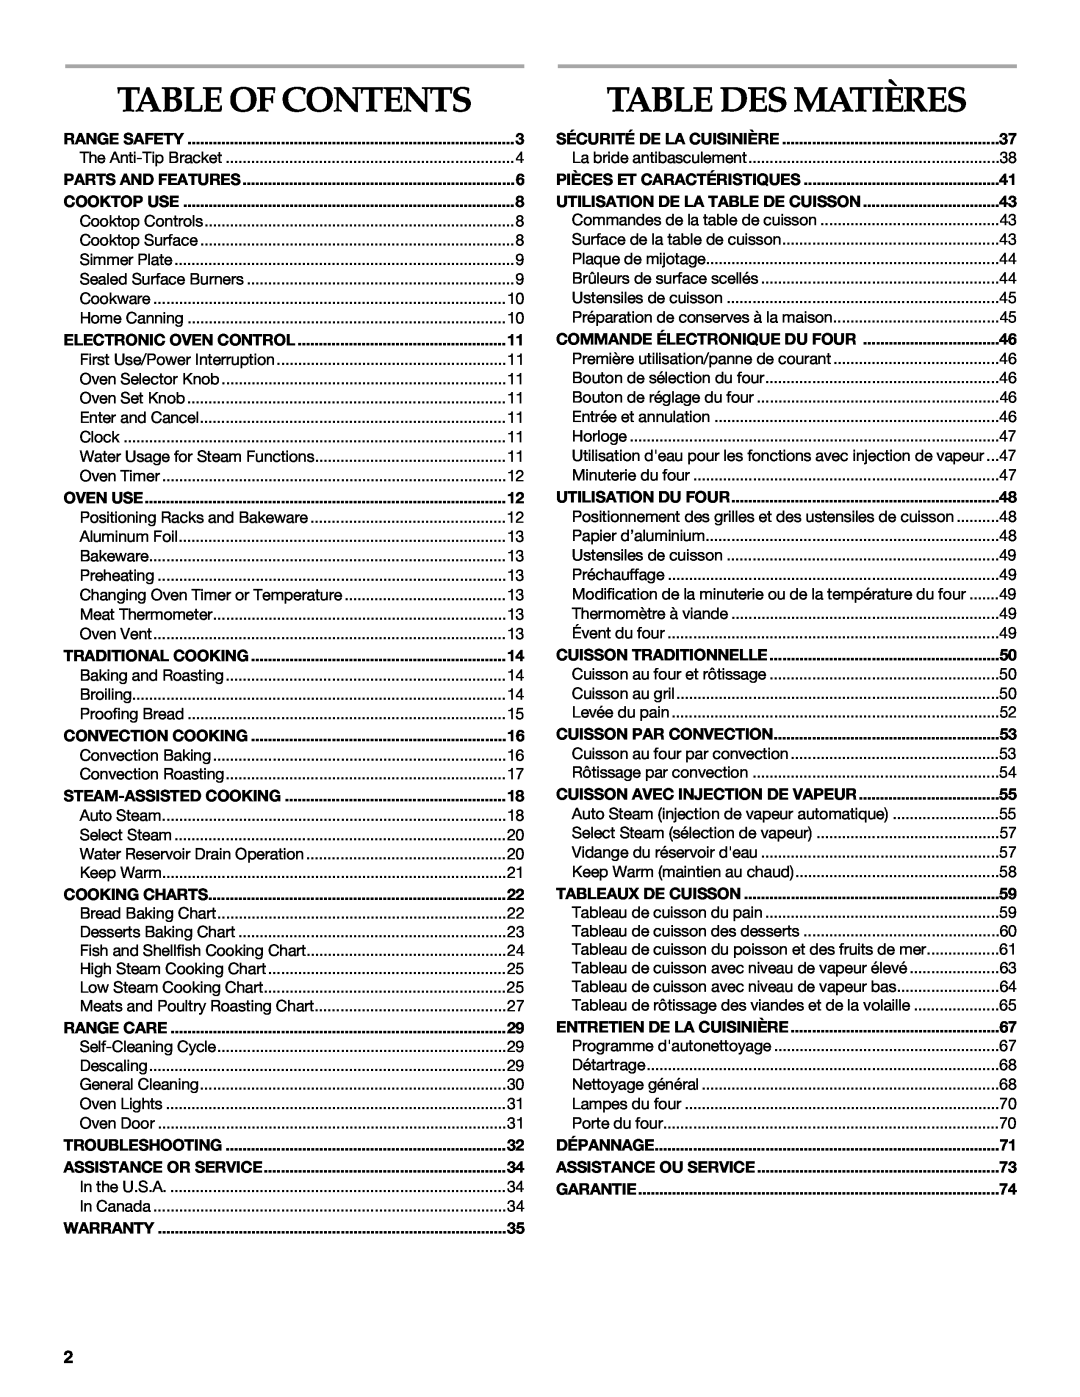 KitchenAid YKDRP707, YKDRP767 manual Table Des Matières, Table Of Contents 